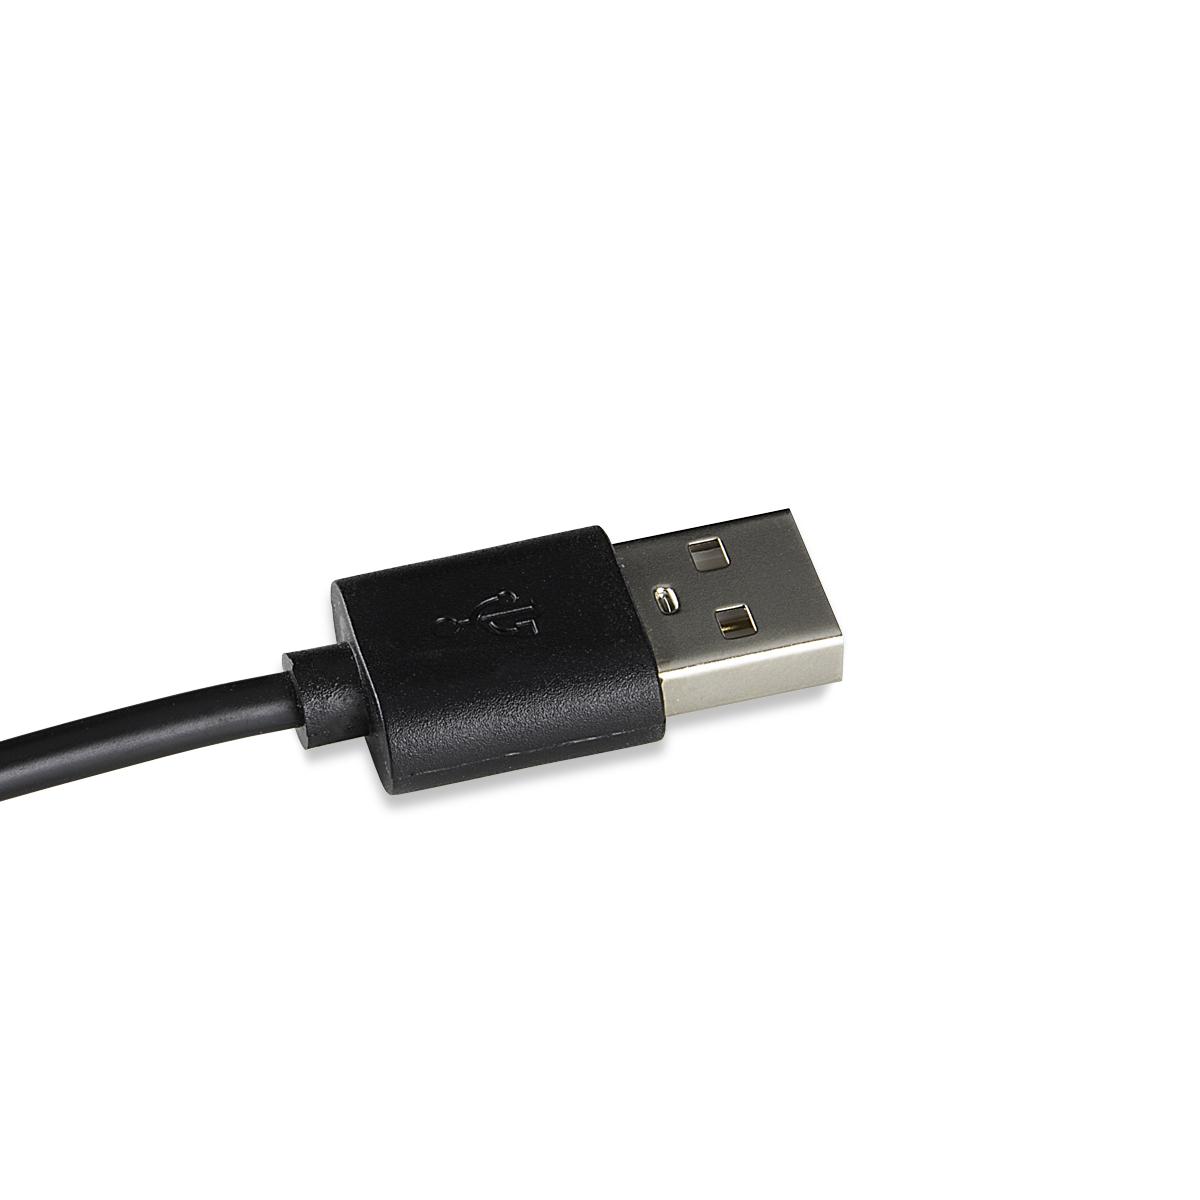 Step Up Spannungswandler USB 5V auf 12V DC 5,5x2,1 mm Stecker Ausgangsleistung 9,6W